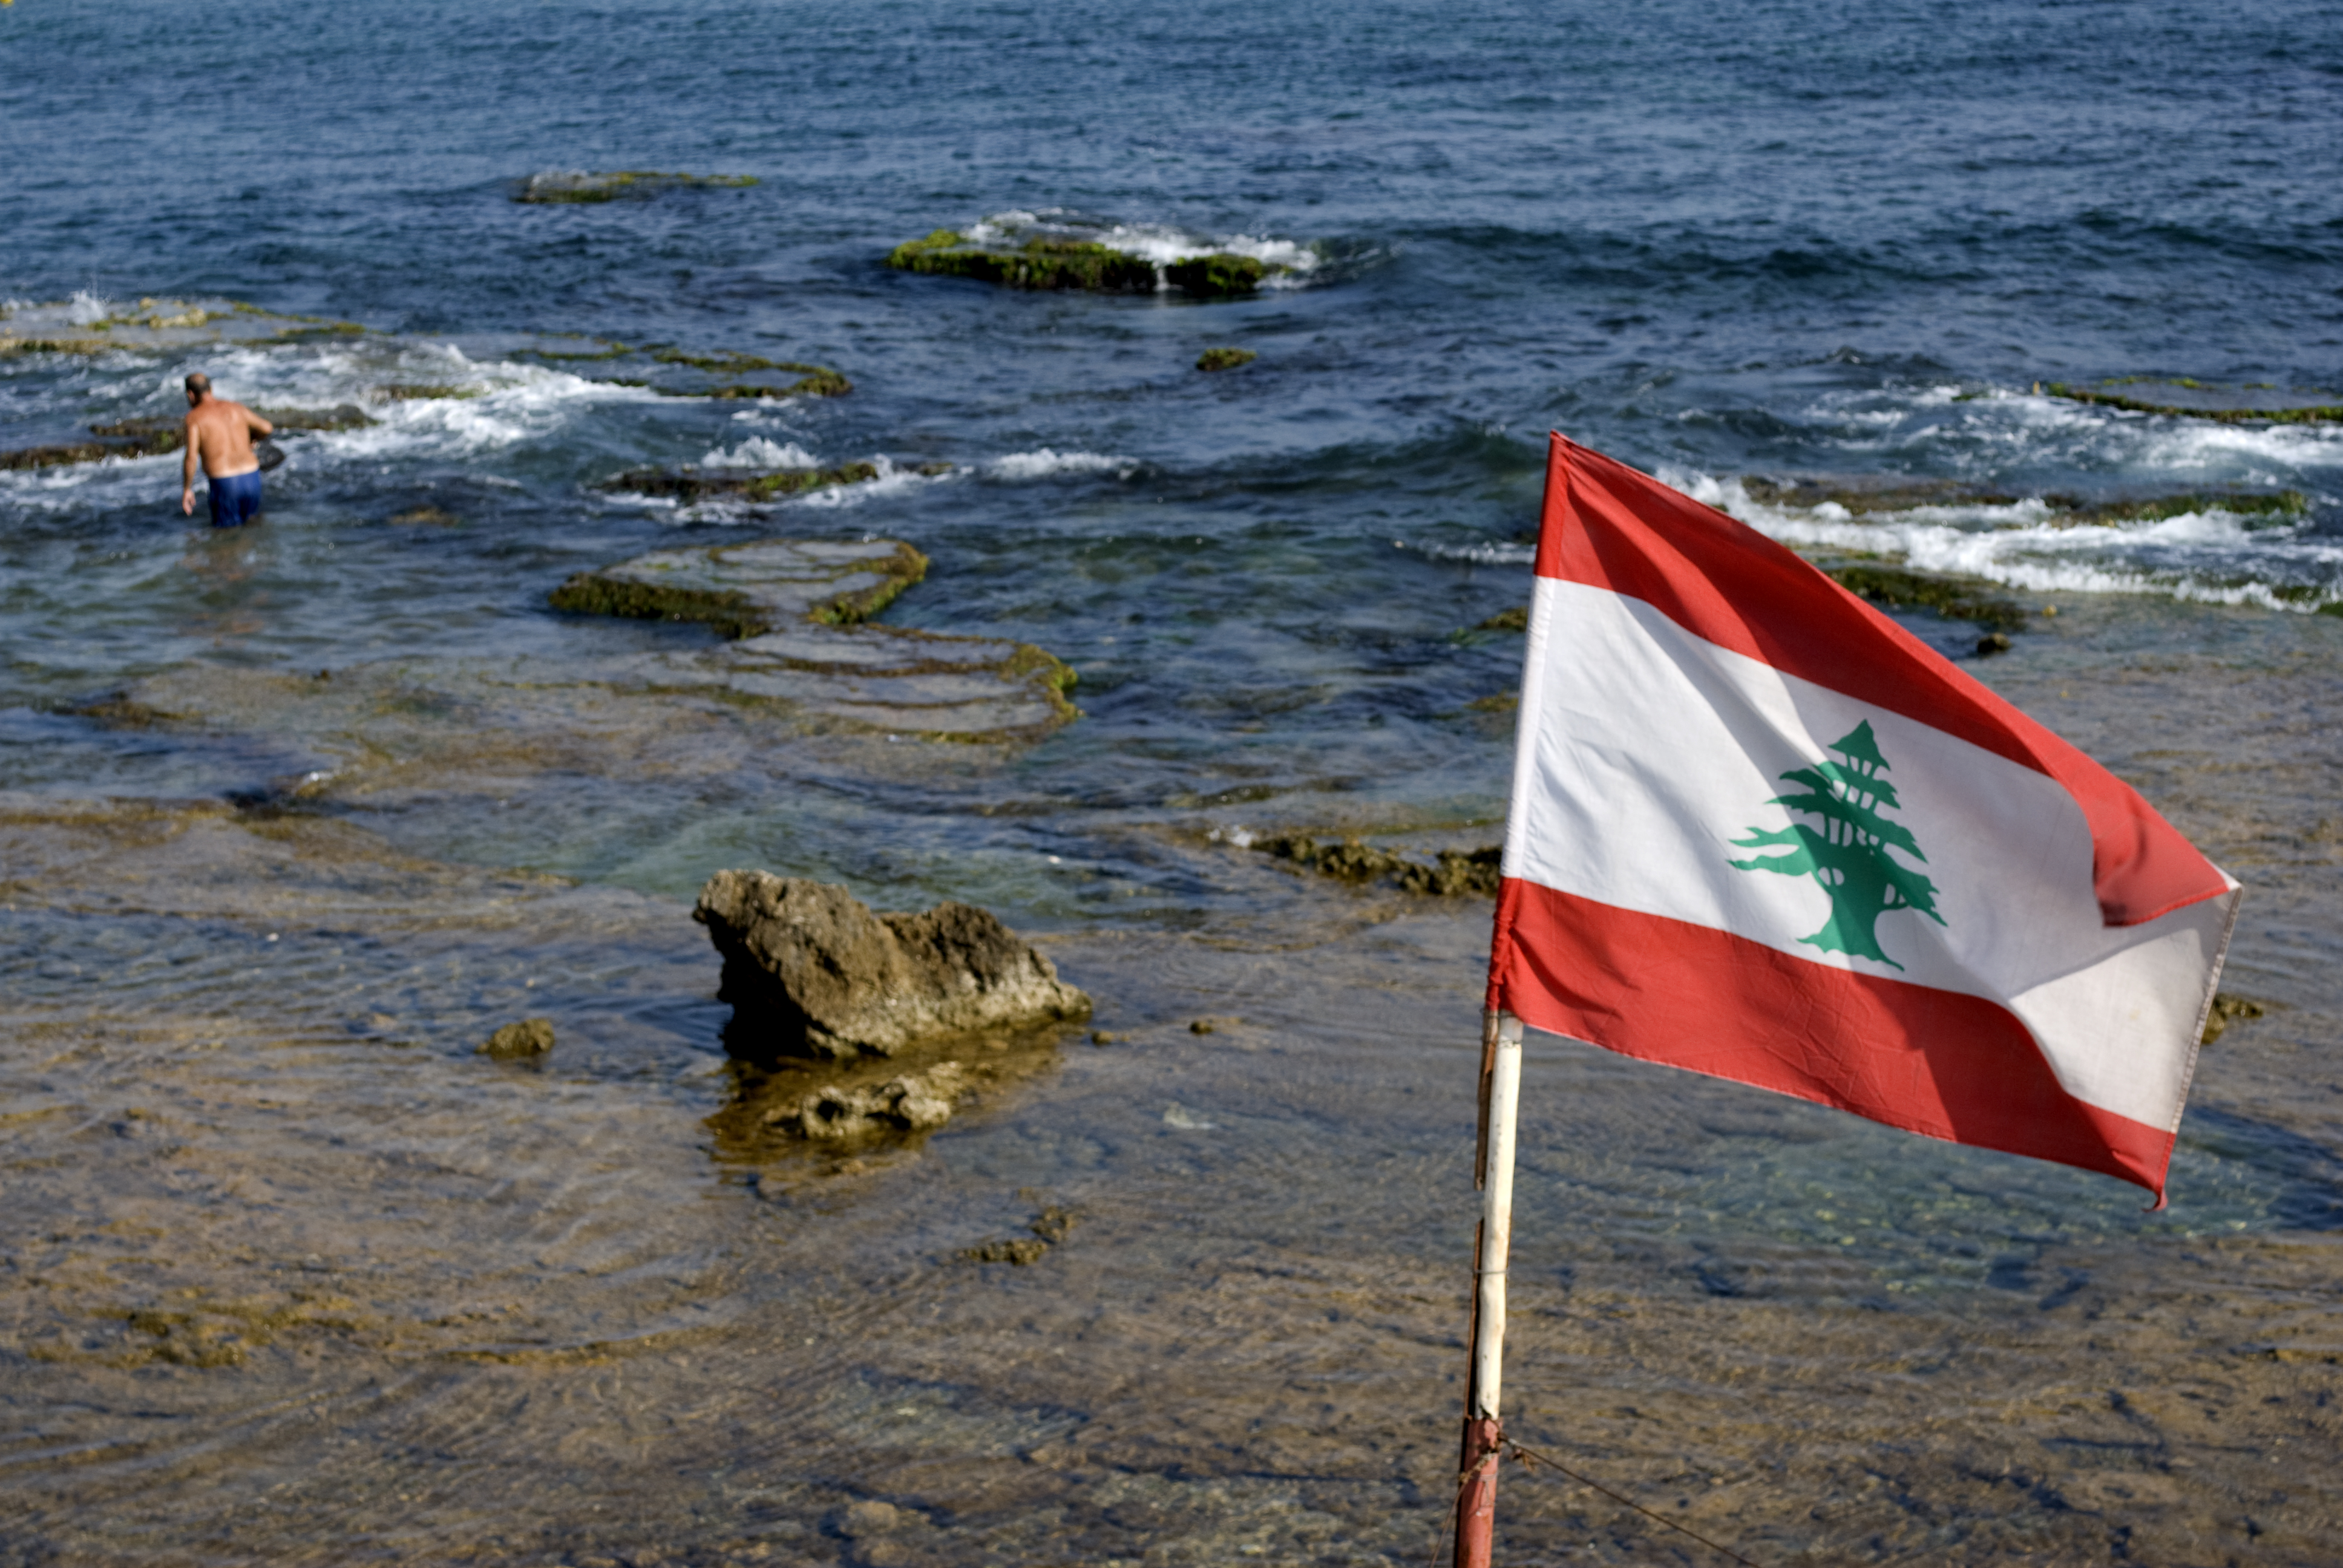 Lebanon Flag Image